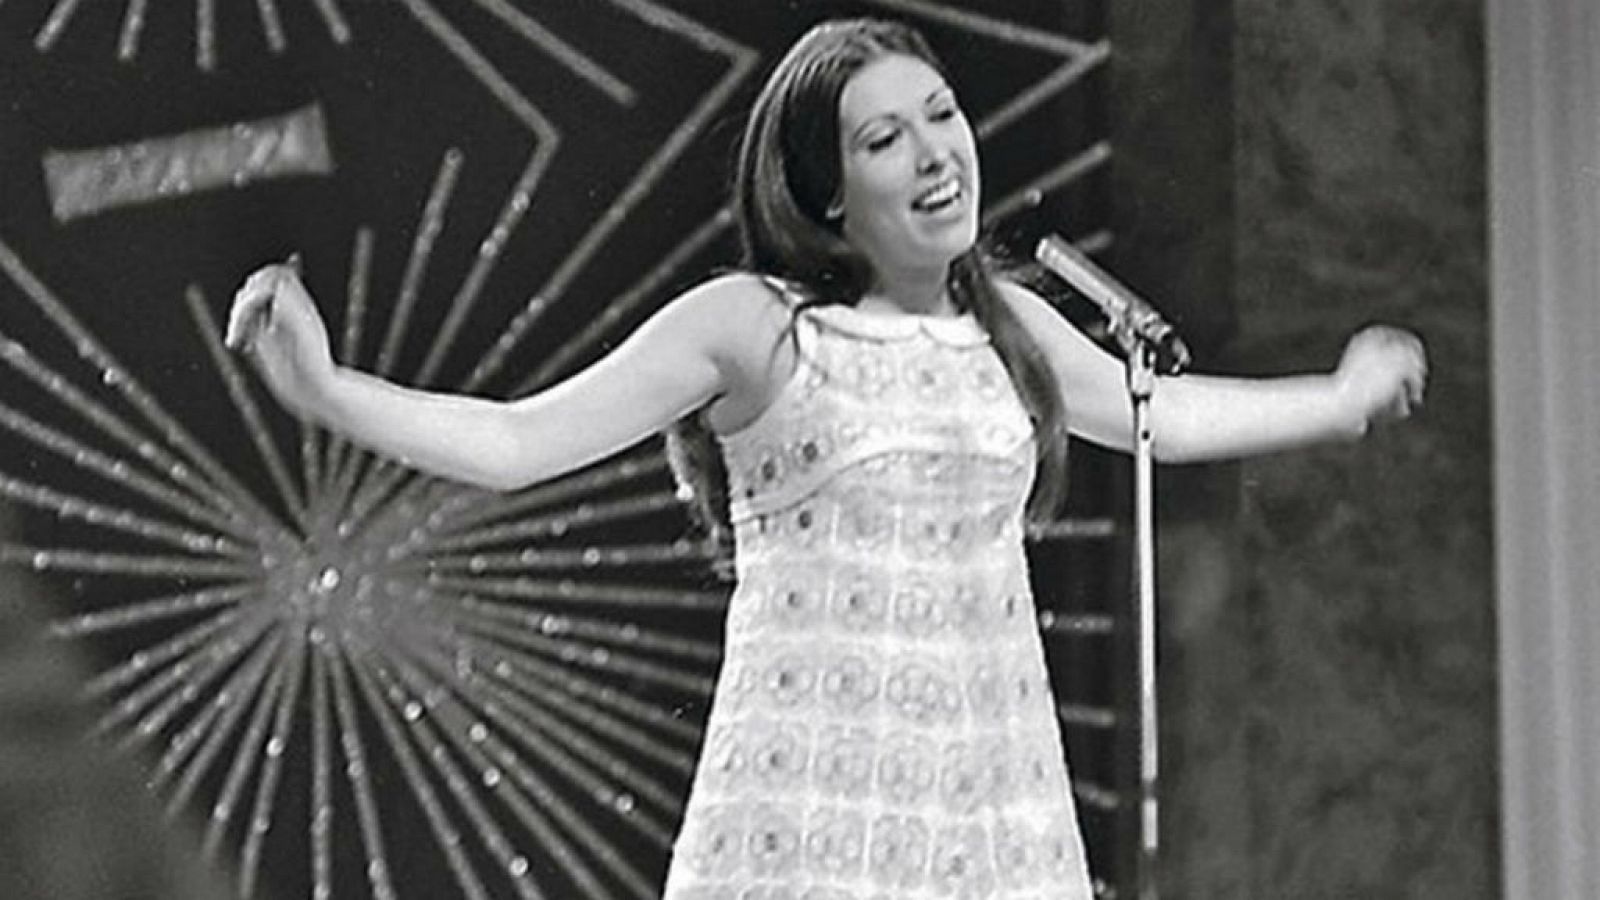 Festival de eurovisión 1968 - Massiel canta 'La la la' (1968)